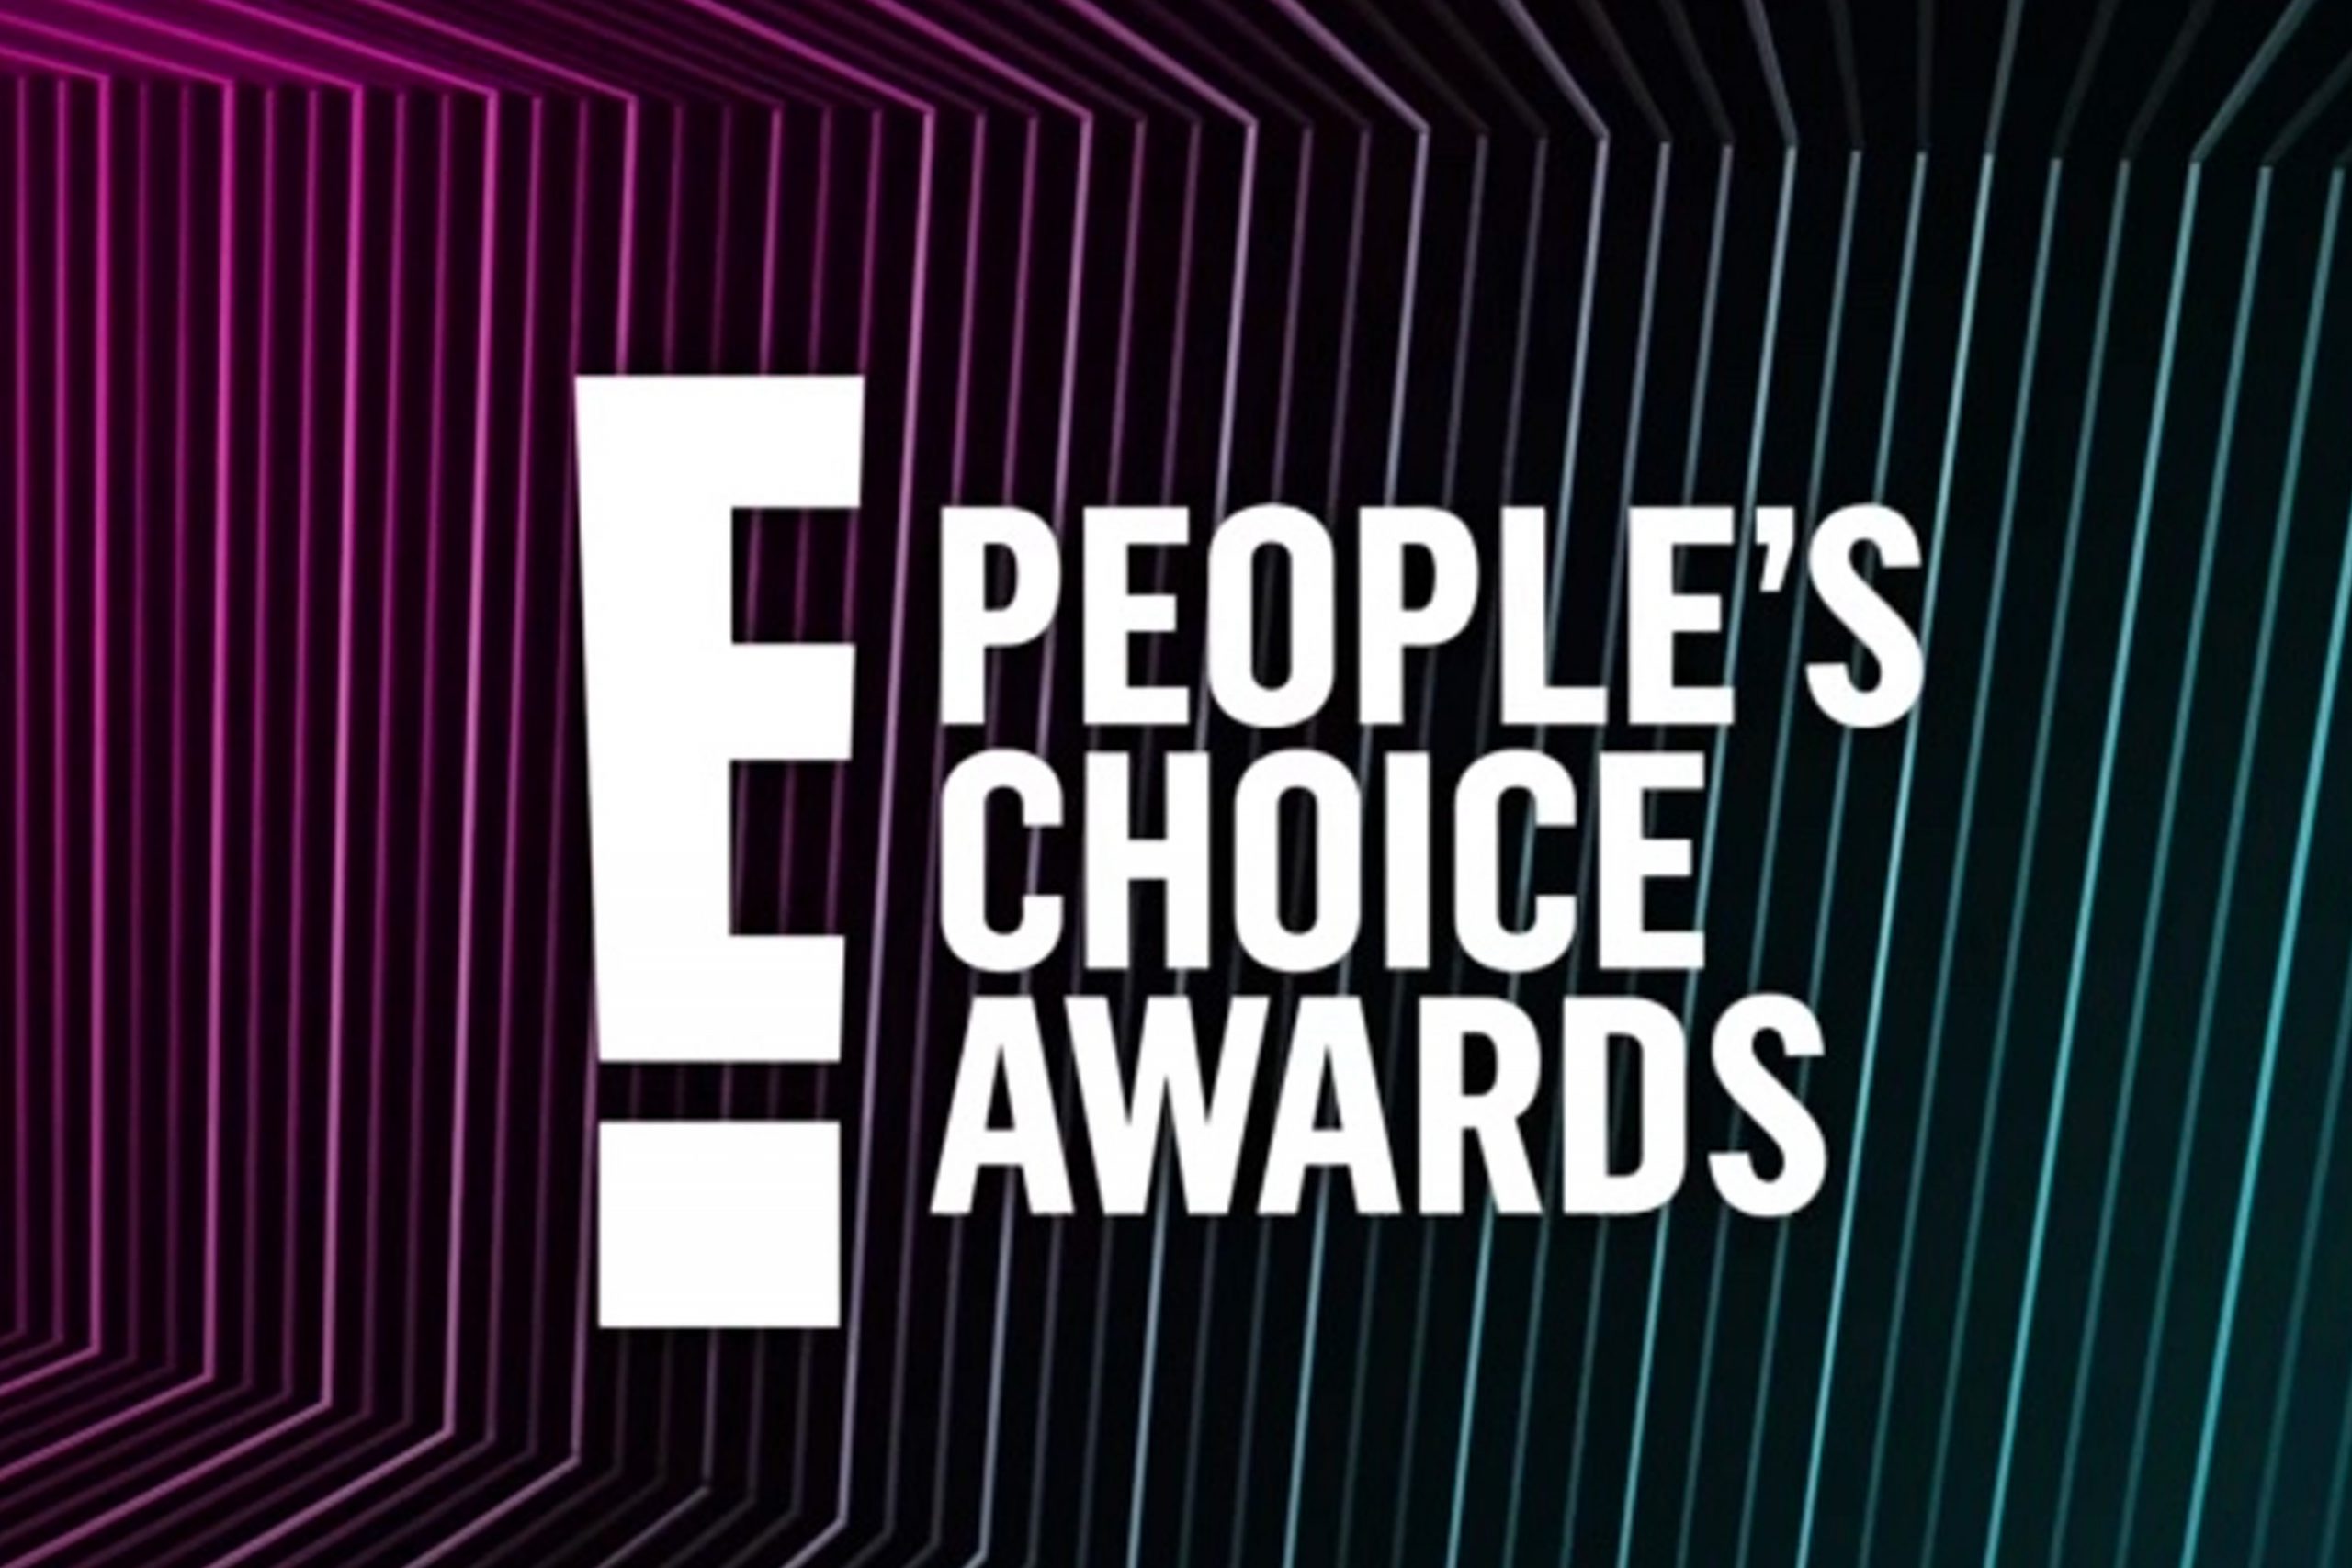 People's choice awards logo